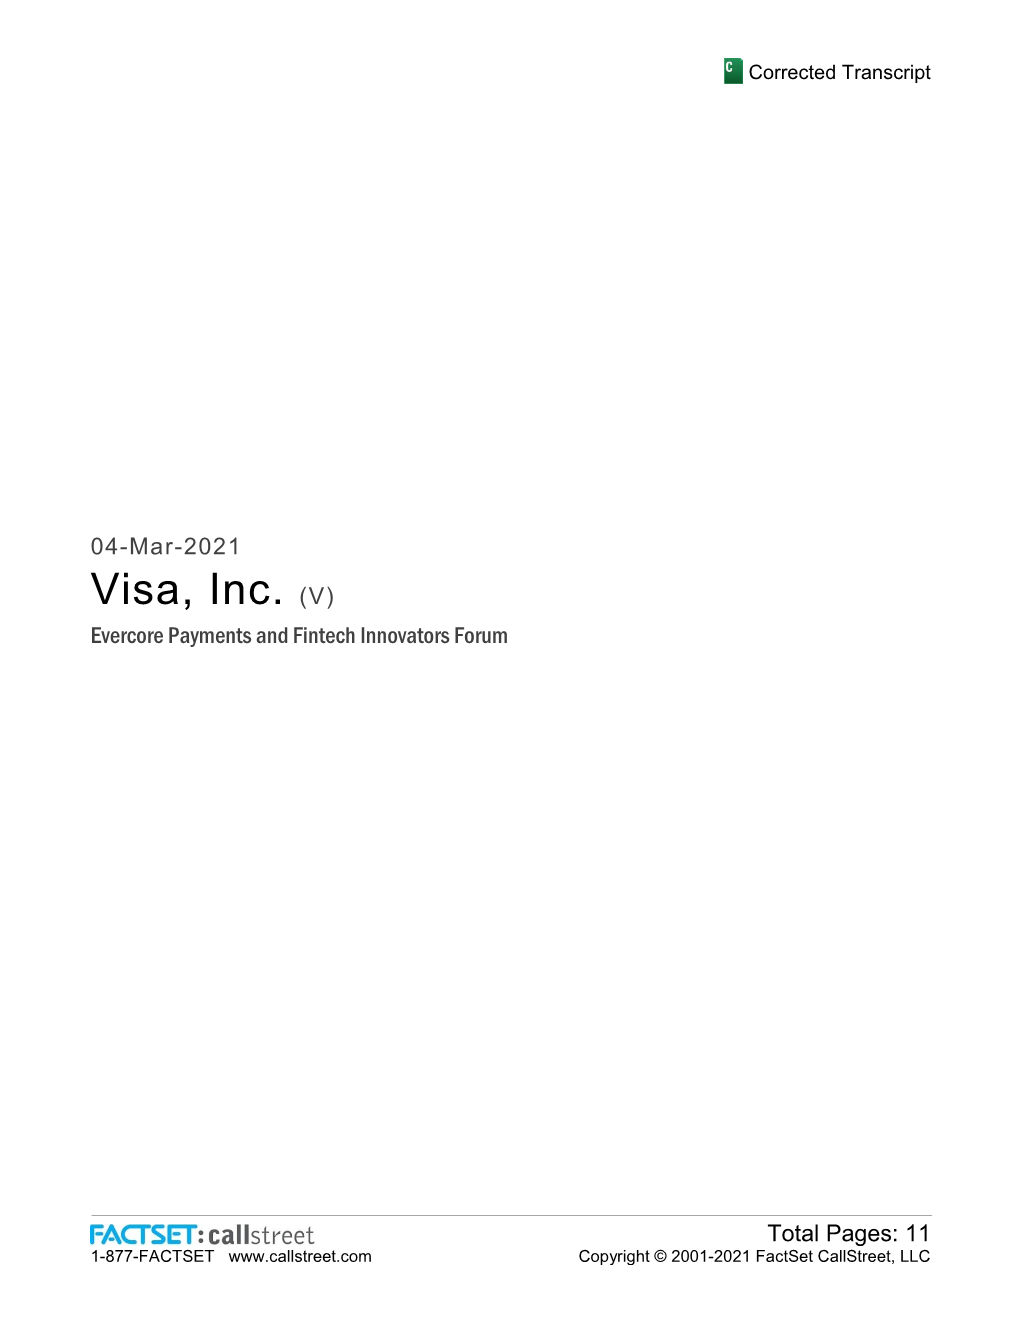 Visa, Inc. (V) Evercore Payments and Fintech Innovators Forum